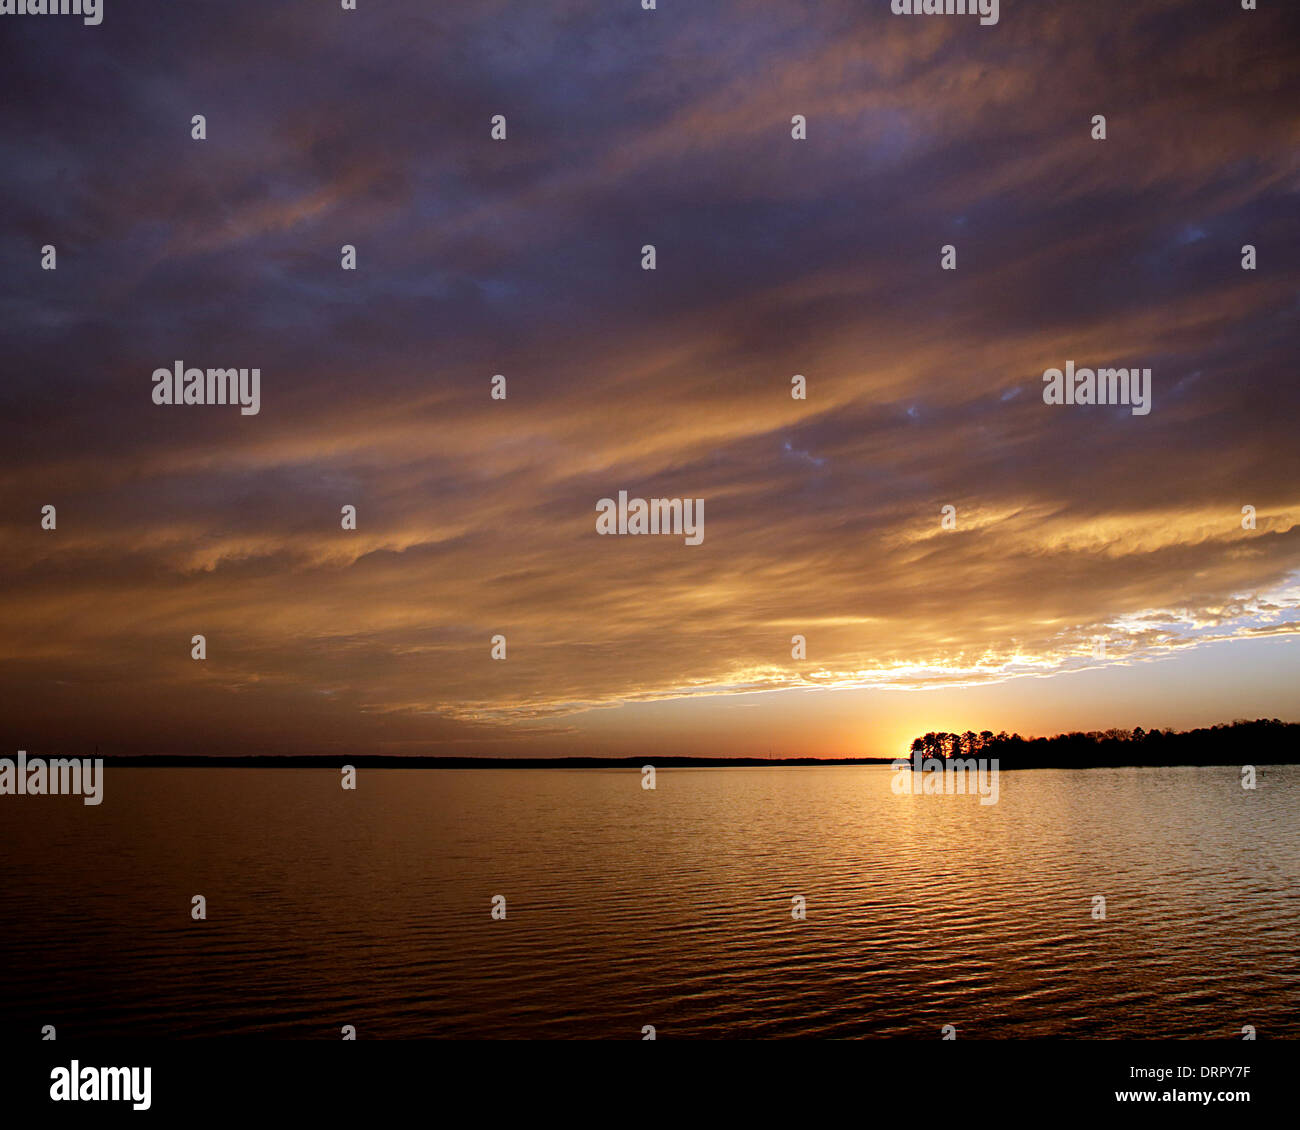 Sonnenuntergang, See Murray, Columbia, SC Fotos von Catherine Brown Stockfoto